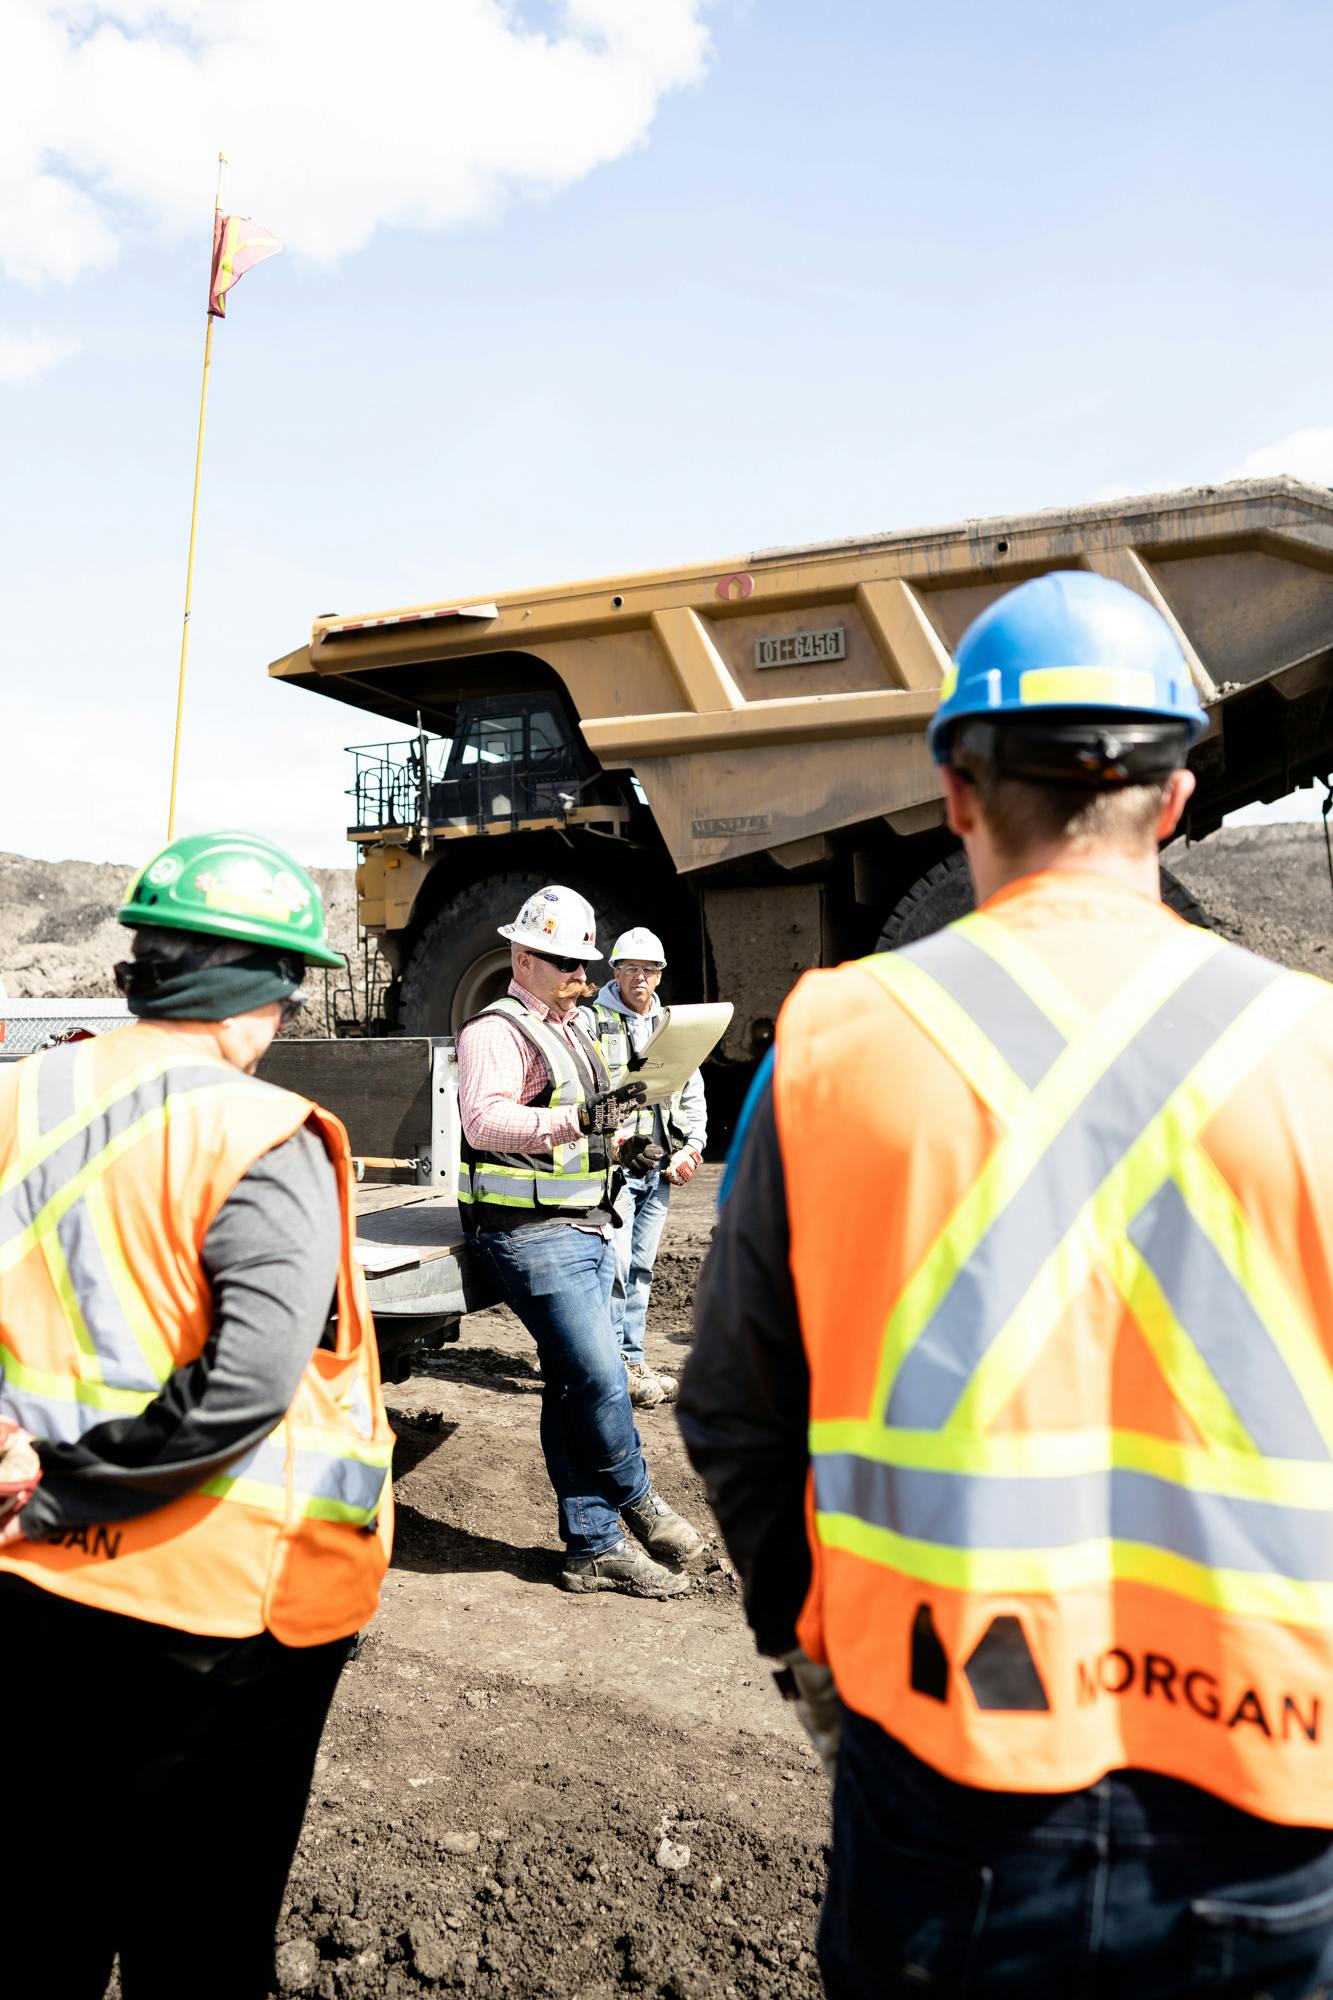 Four construction workers standing near a yellow dump truck.